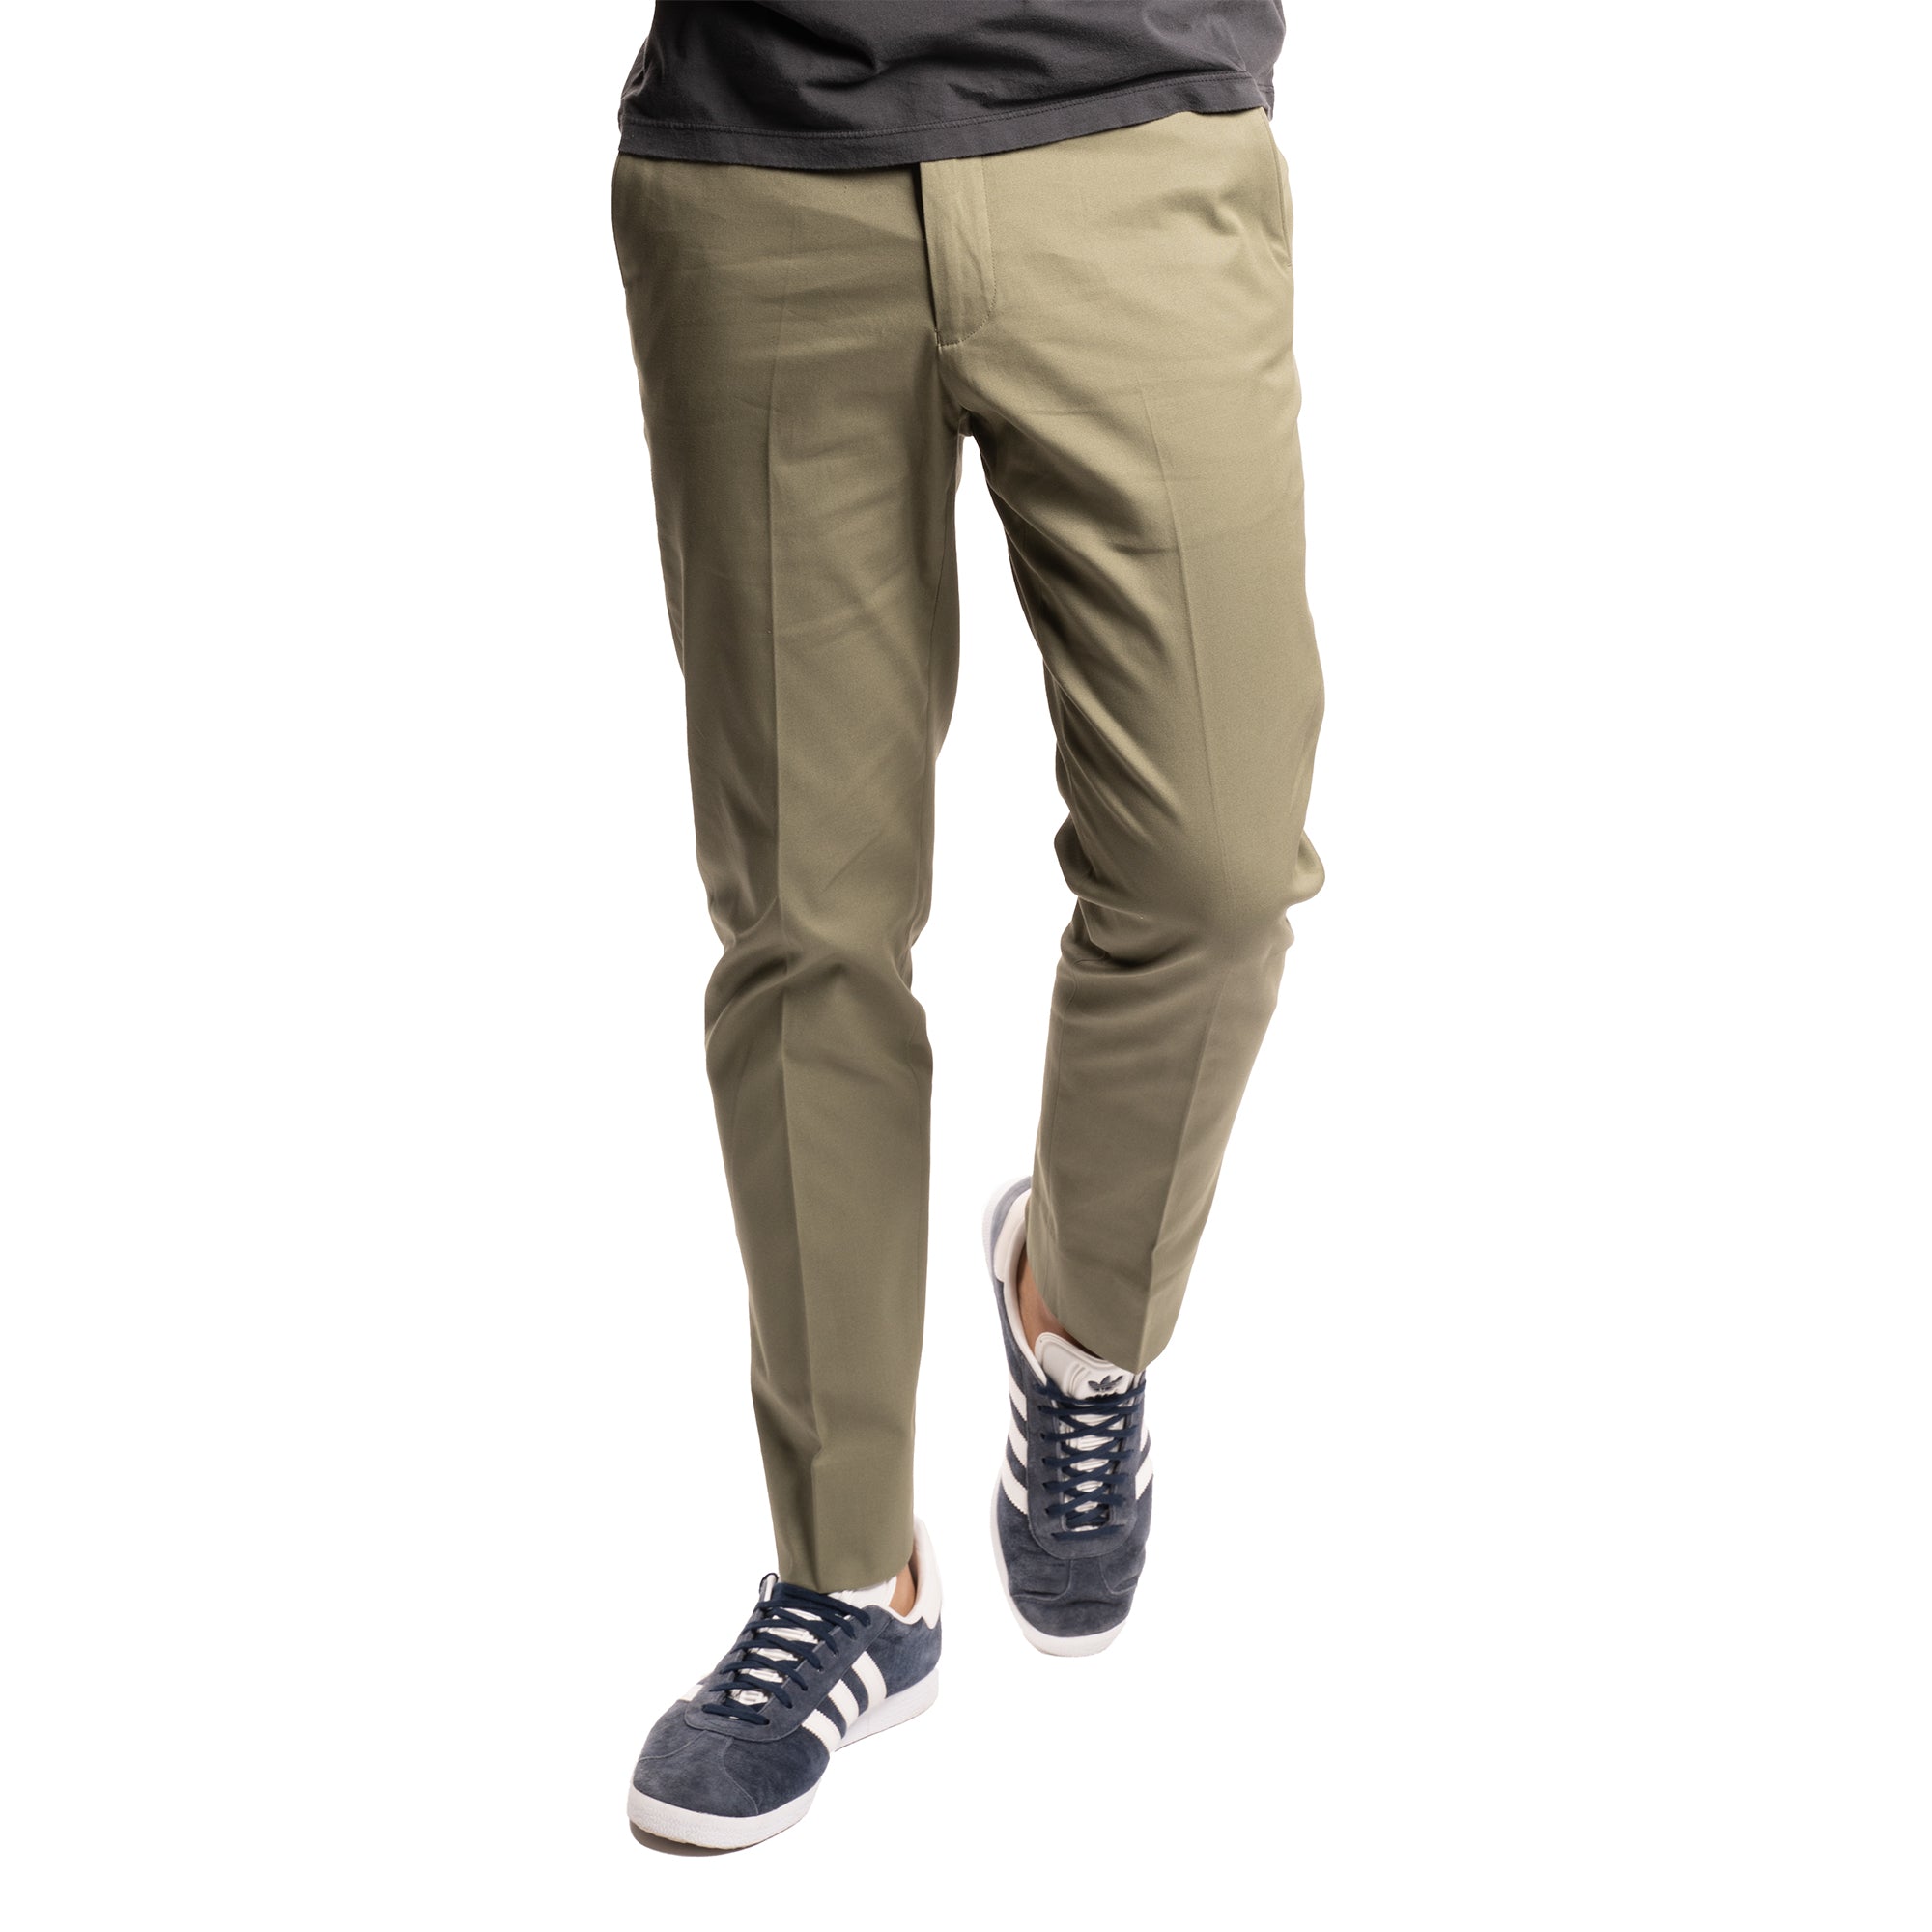 Shop 4 Pack of Men's Stretcher Khaki Trousers - Black,Navy Blue